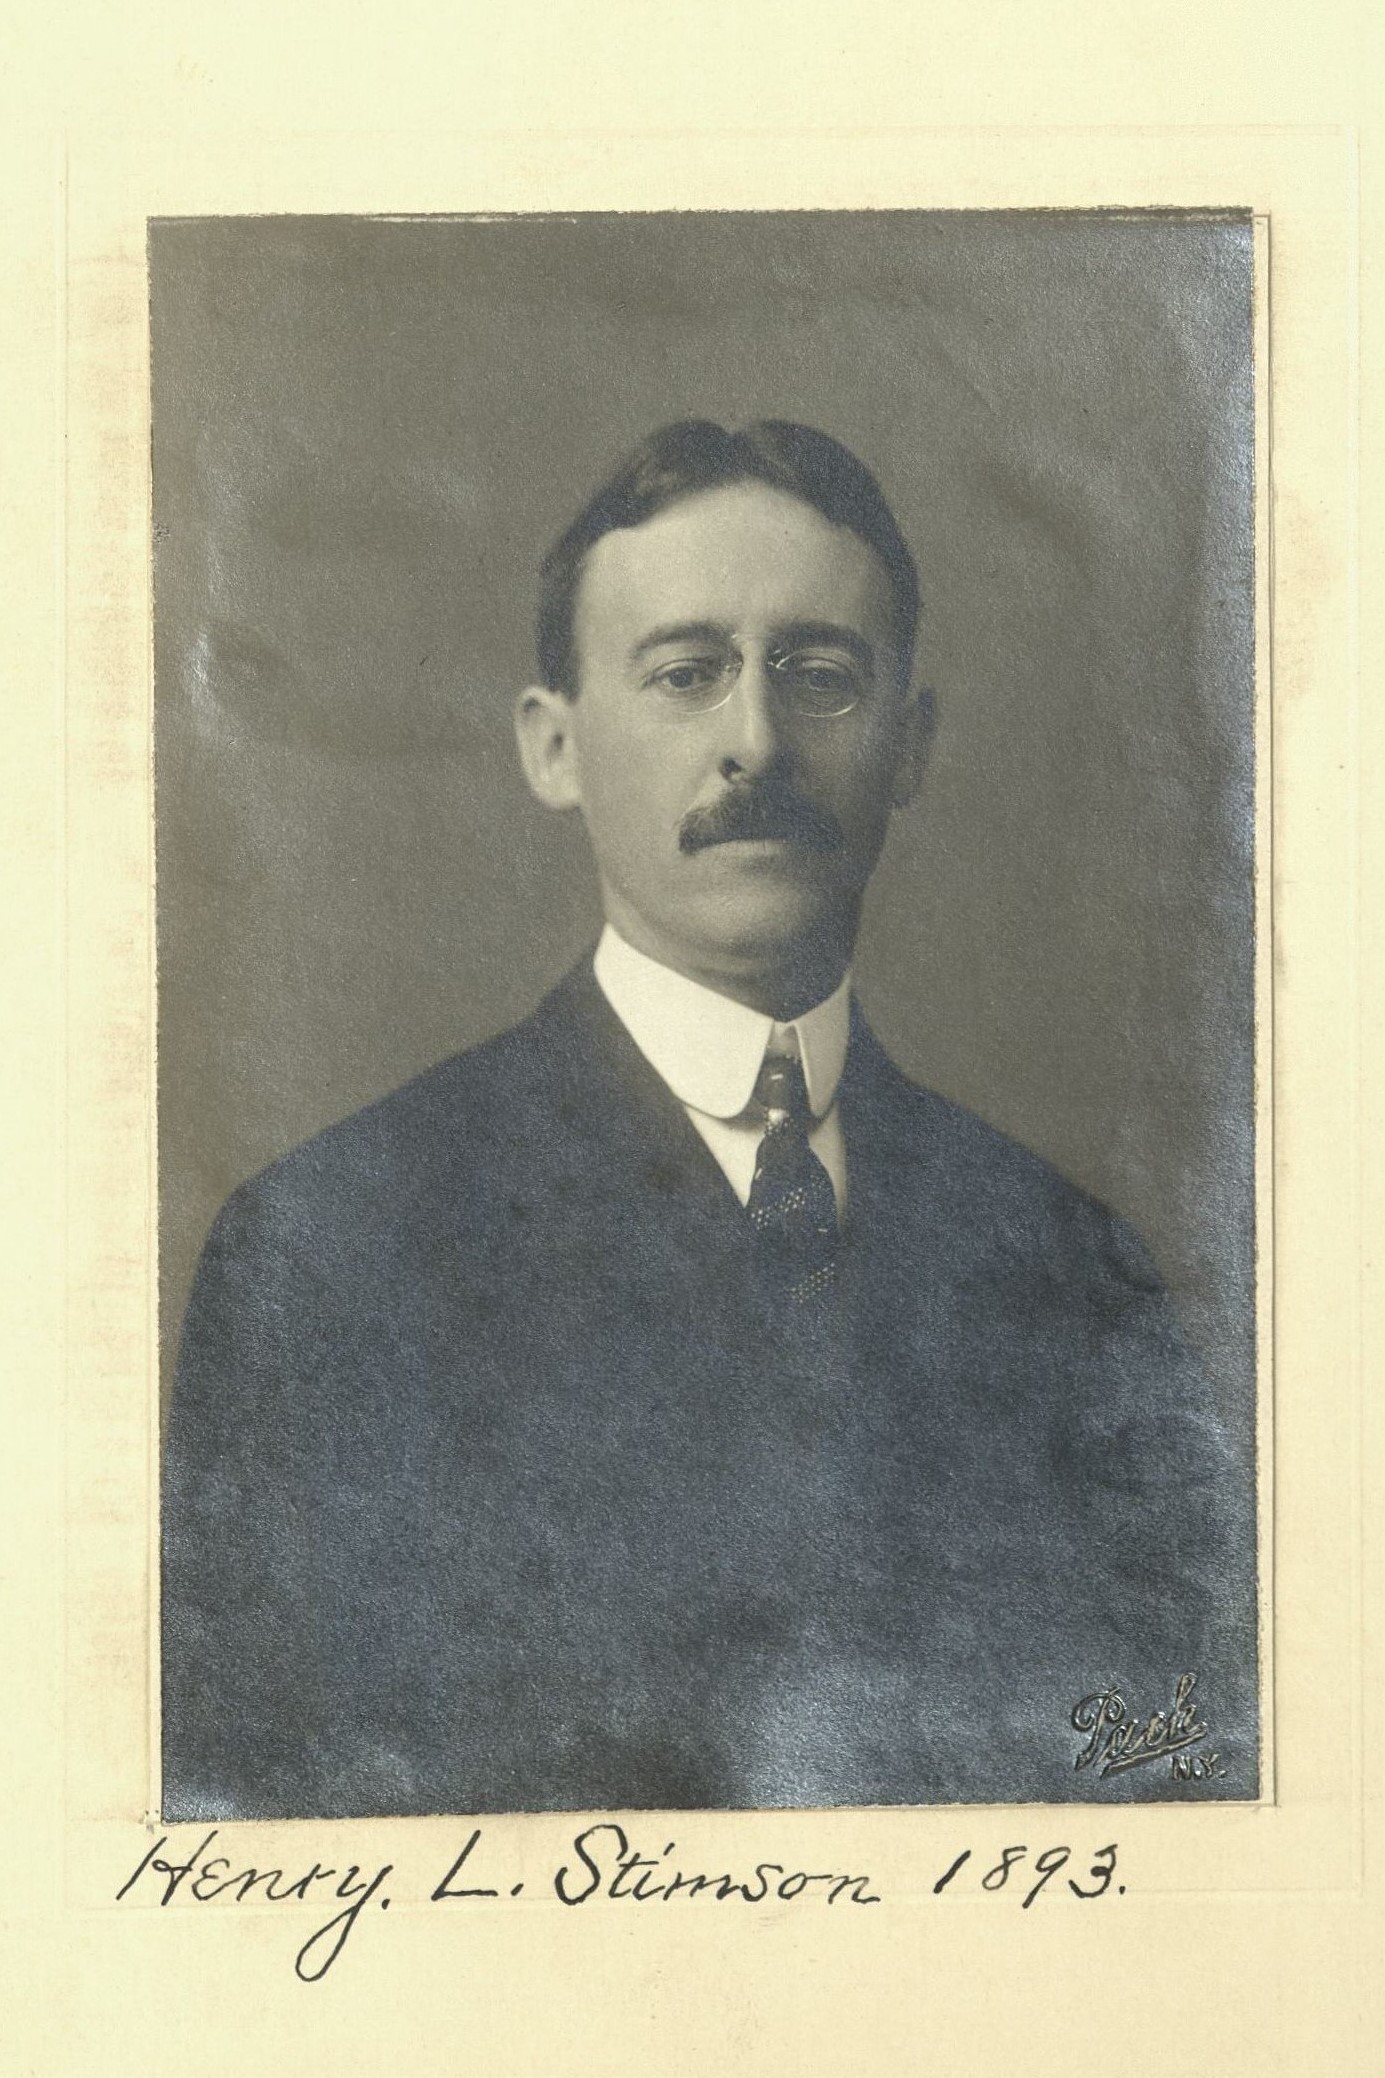 Member portrait of Henry L. Stimson